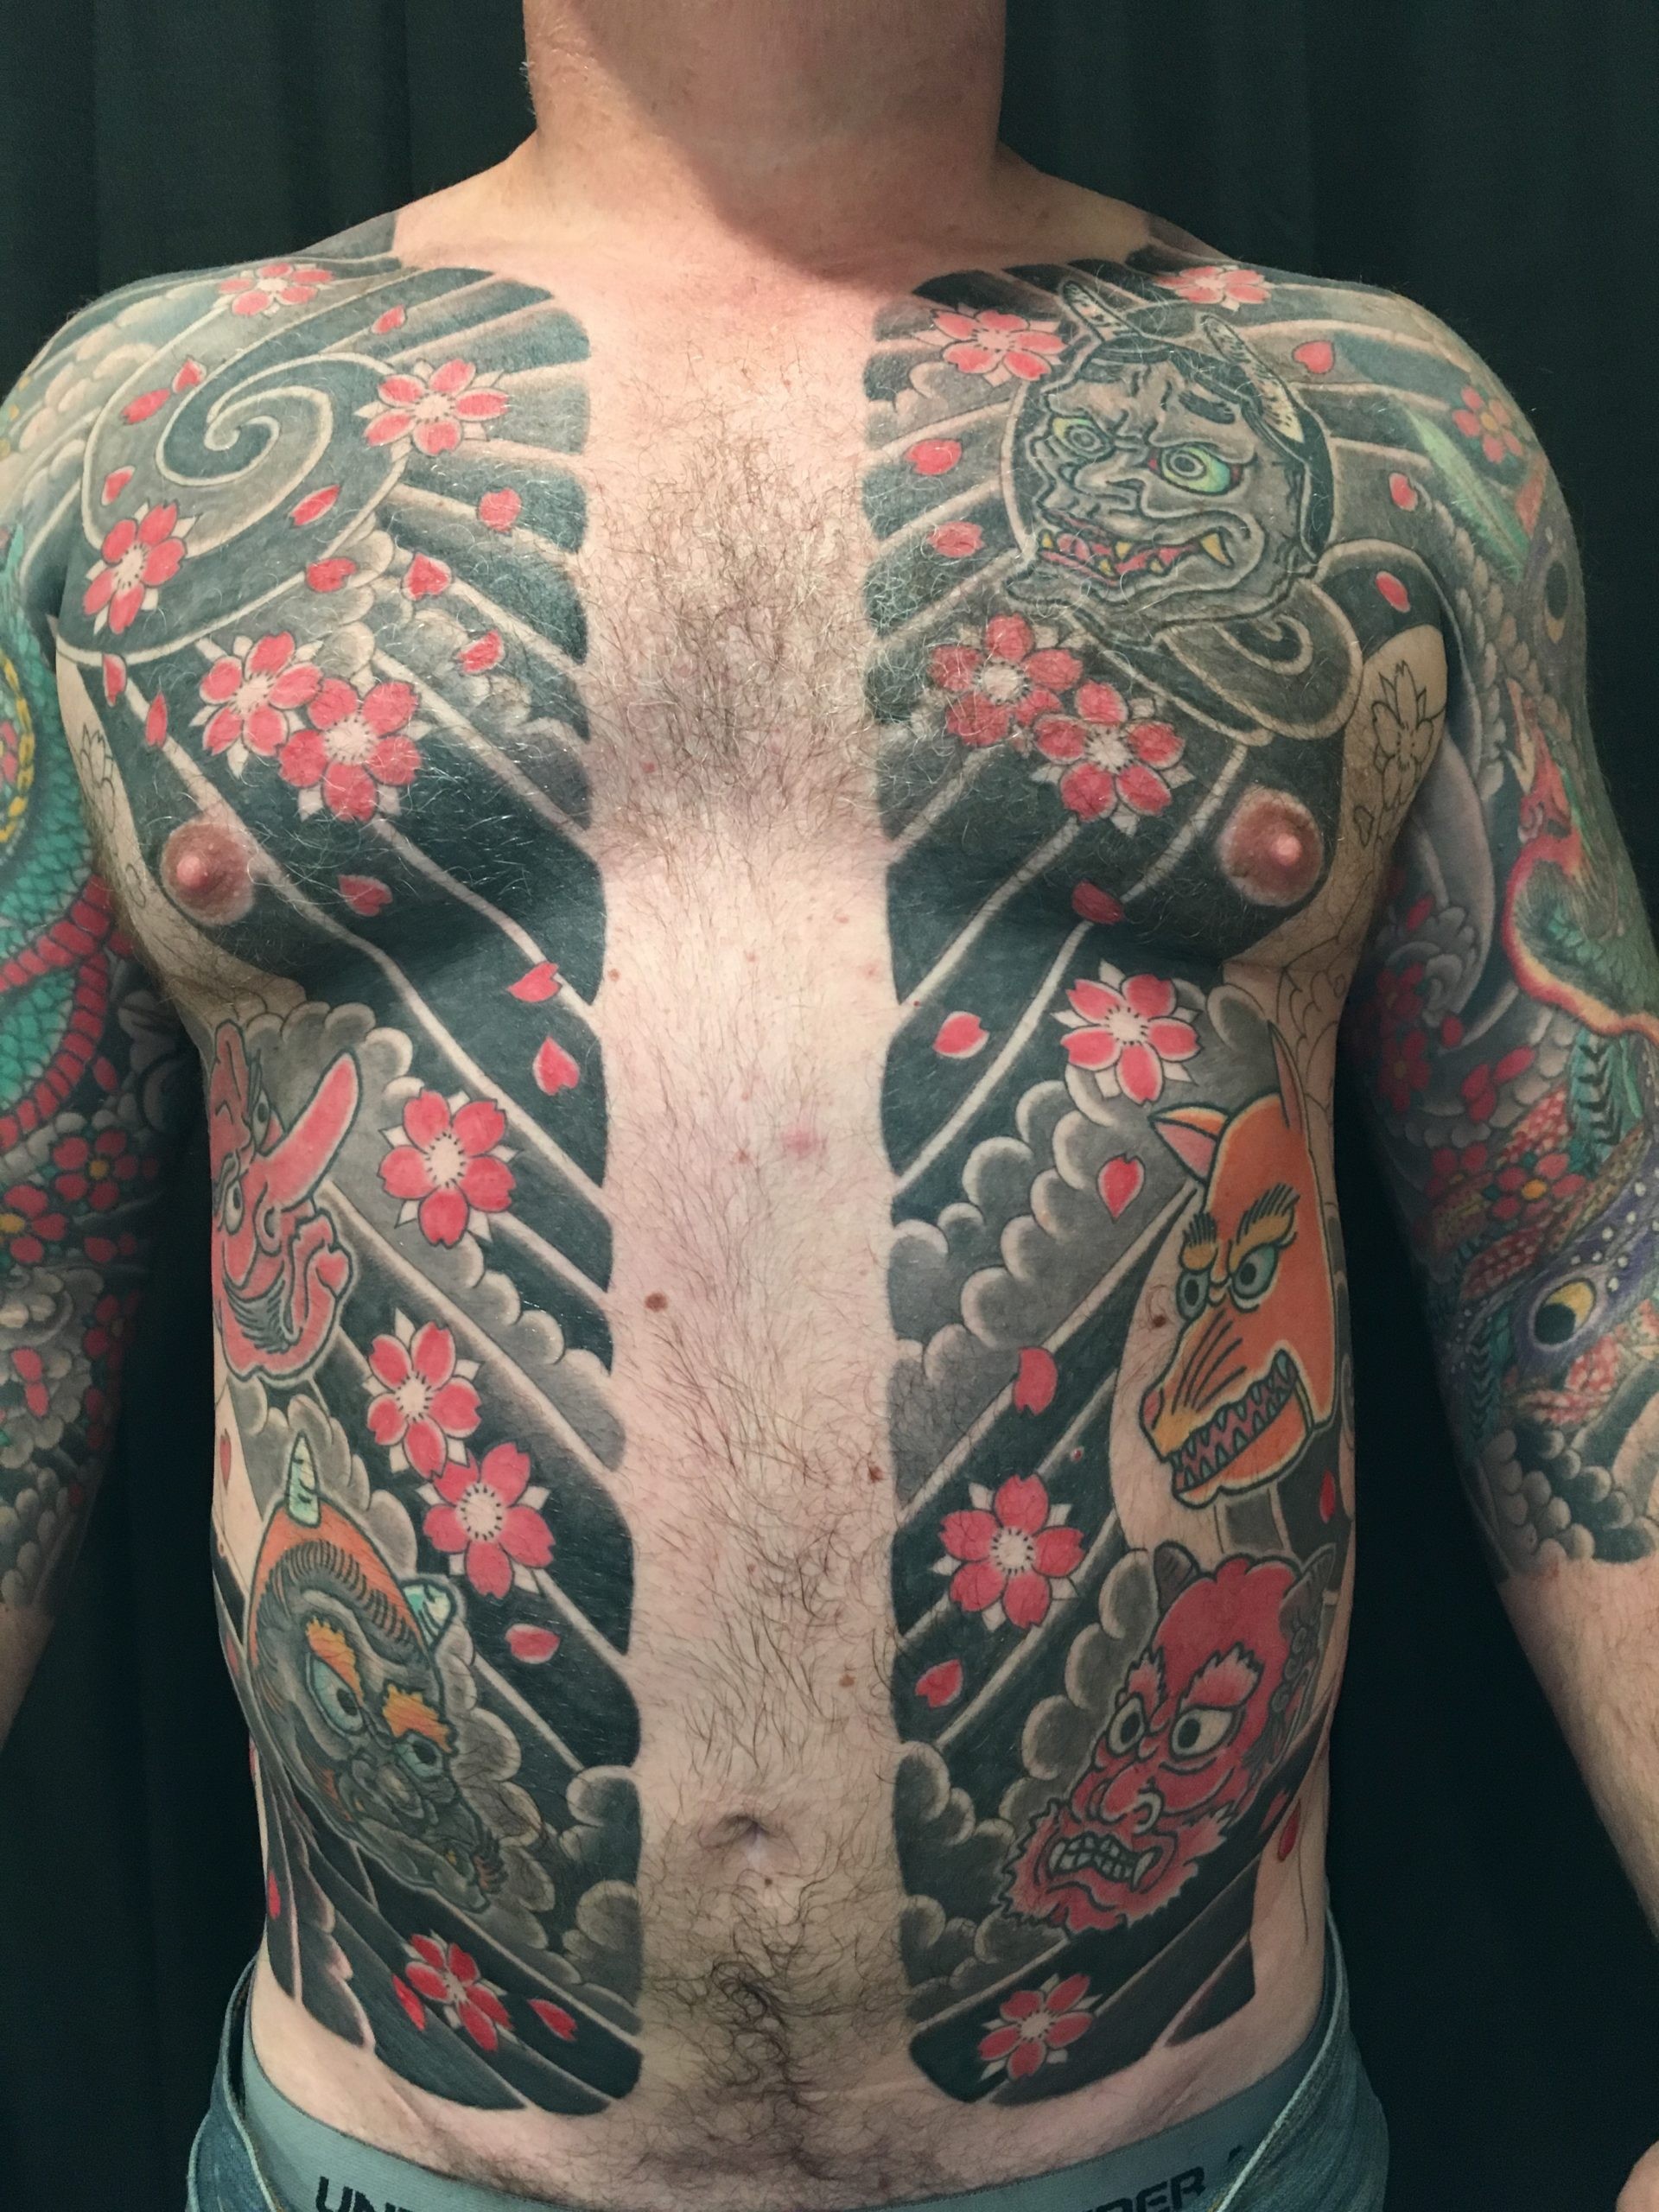 Dallas Ink Master Deanna James baroqueinspired tattoos are taking over  TikTok  KERA News